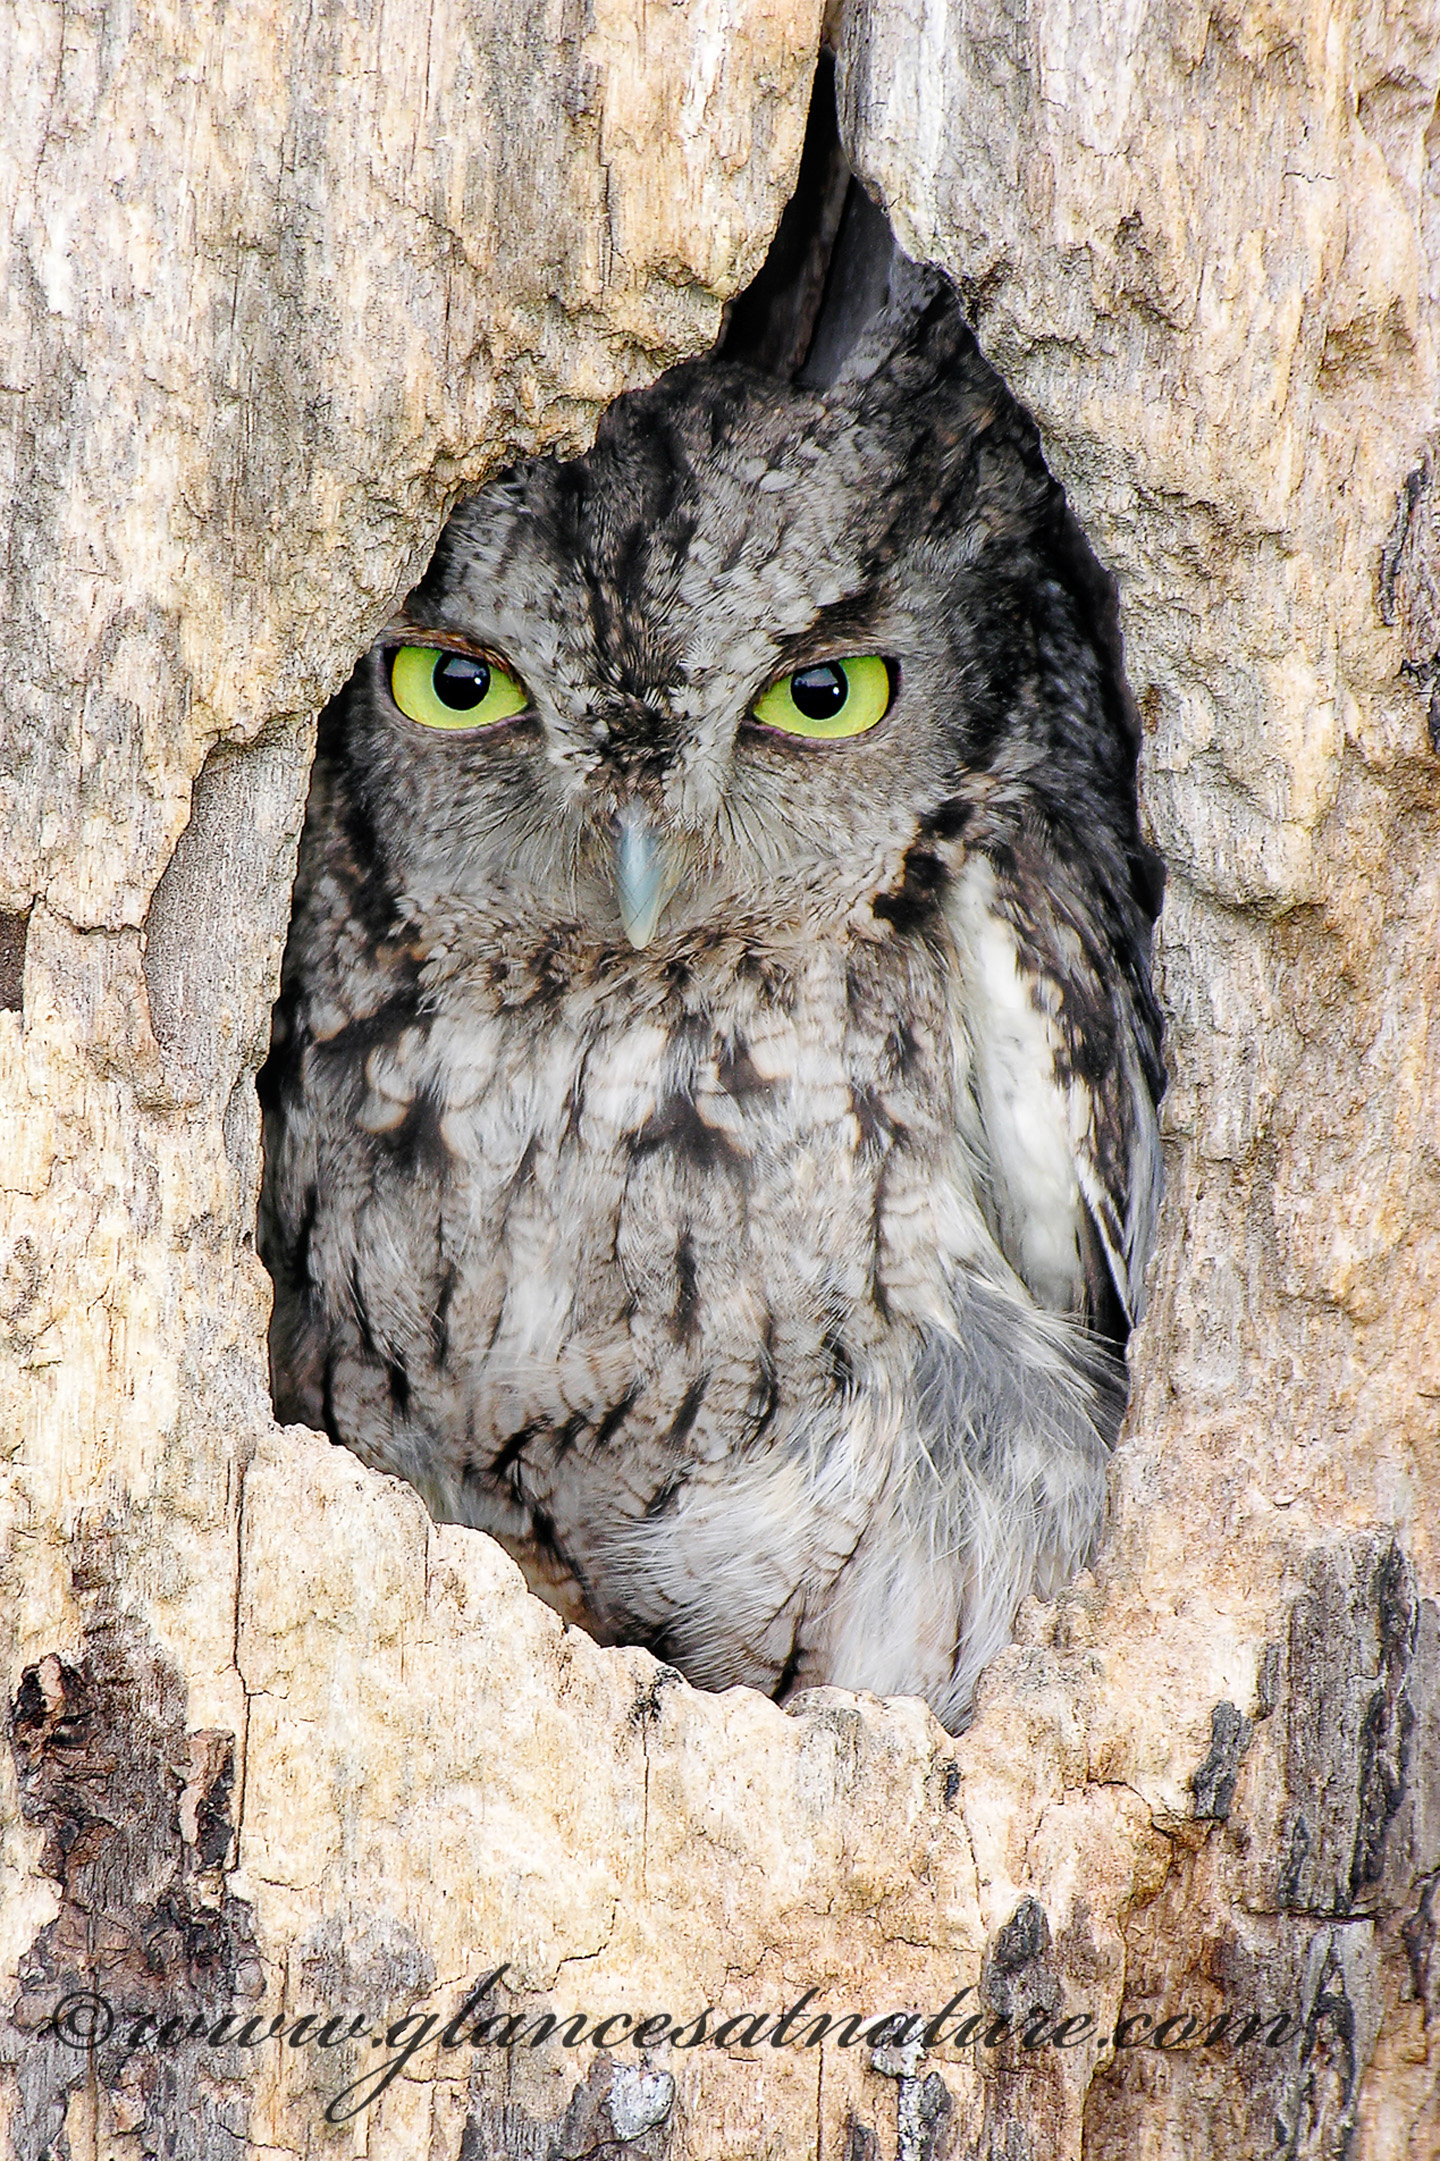 Owling 101